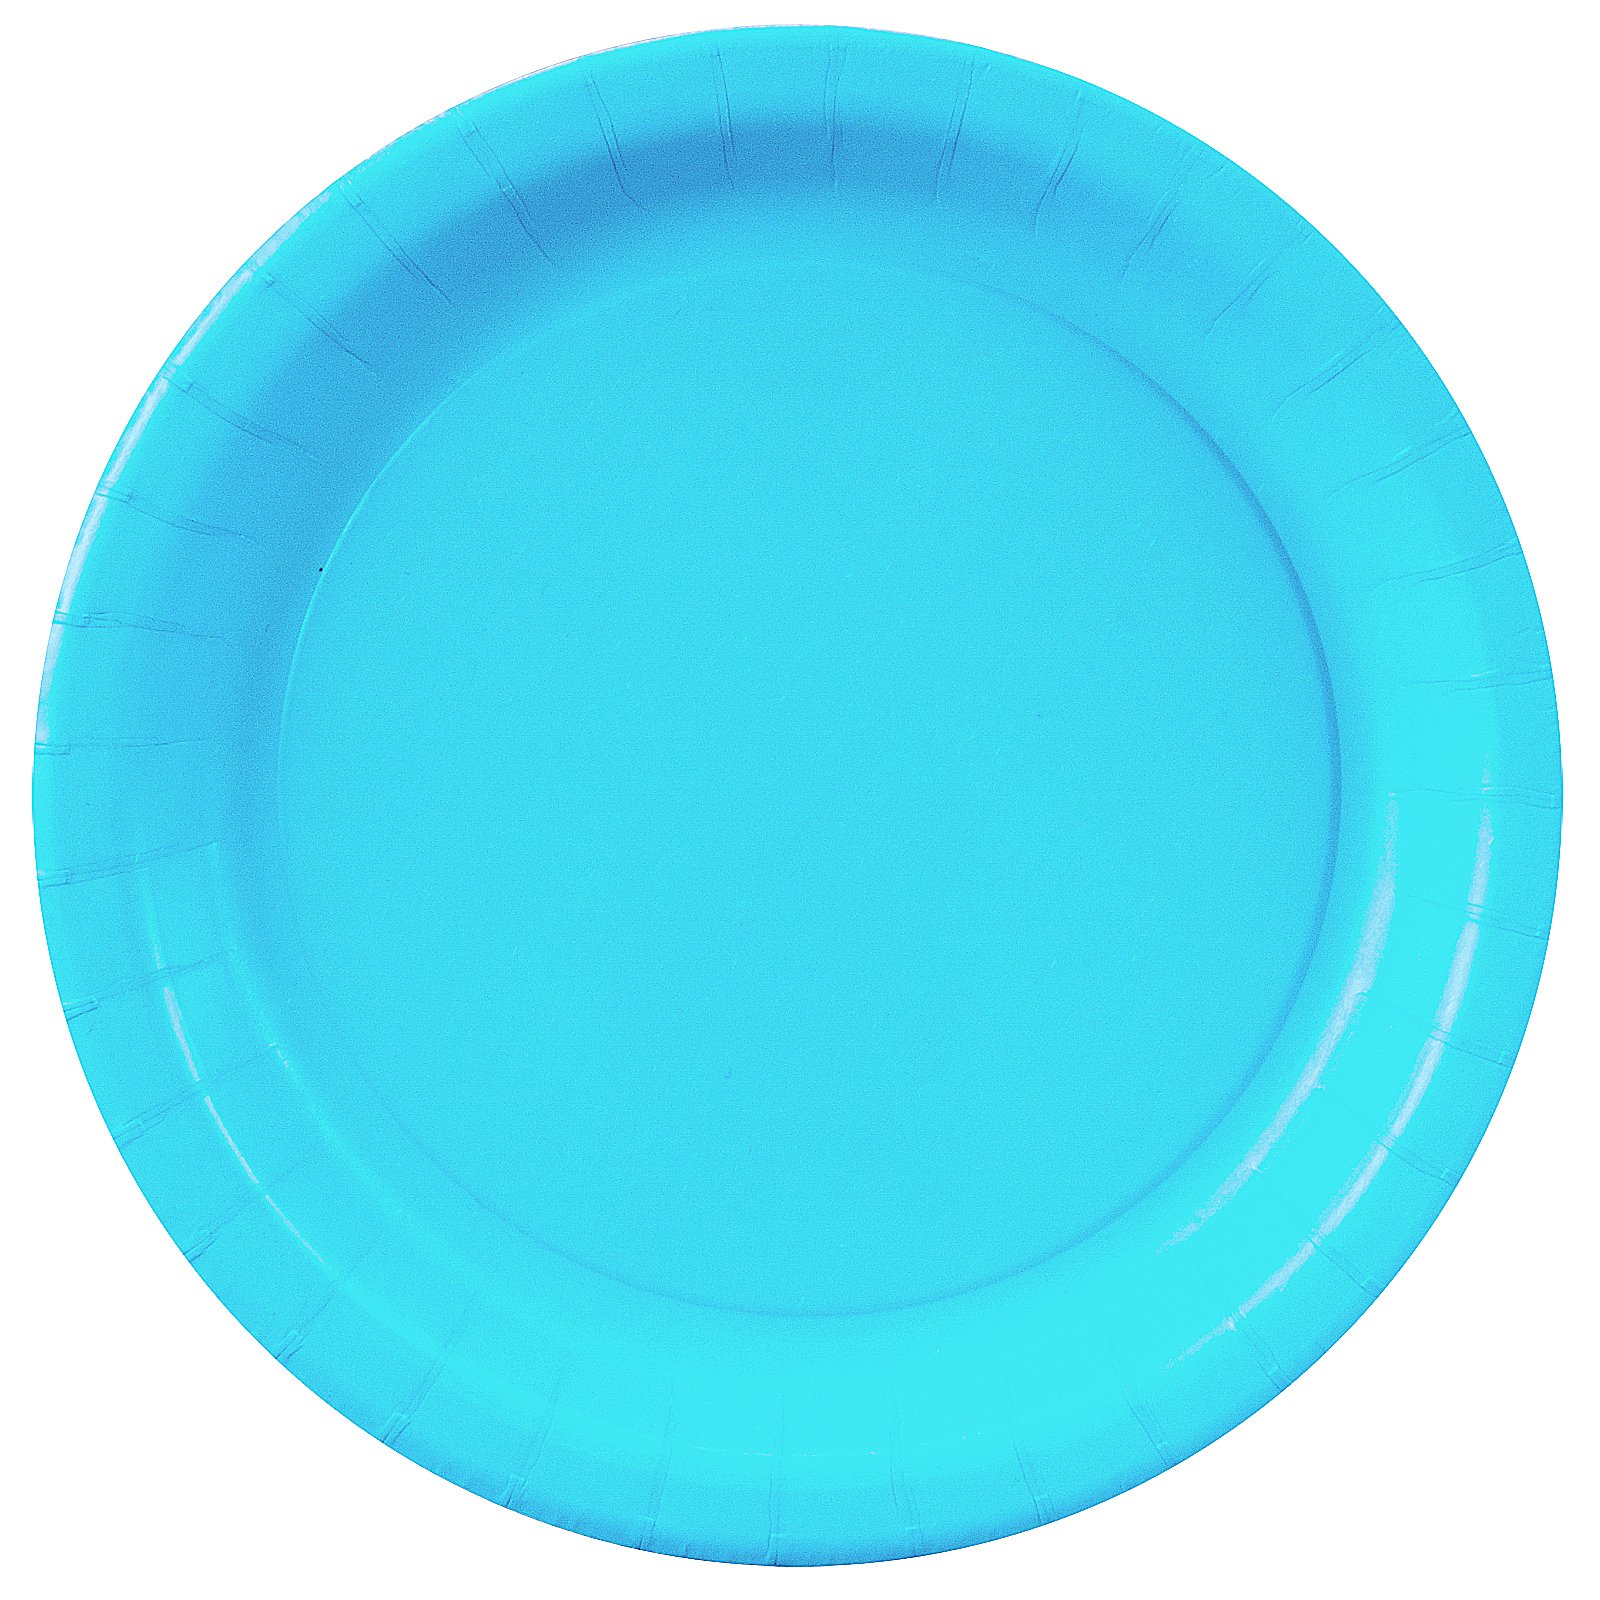 Bermuda Blue (Turquoise) Paper Dessert Plates (24 count)